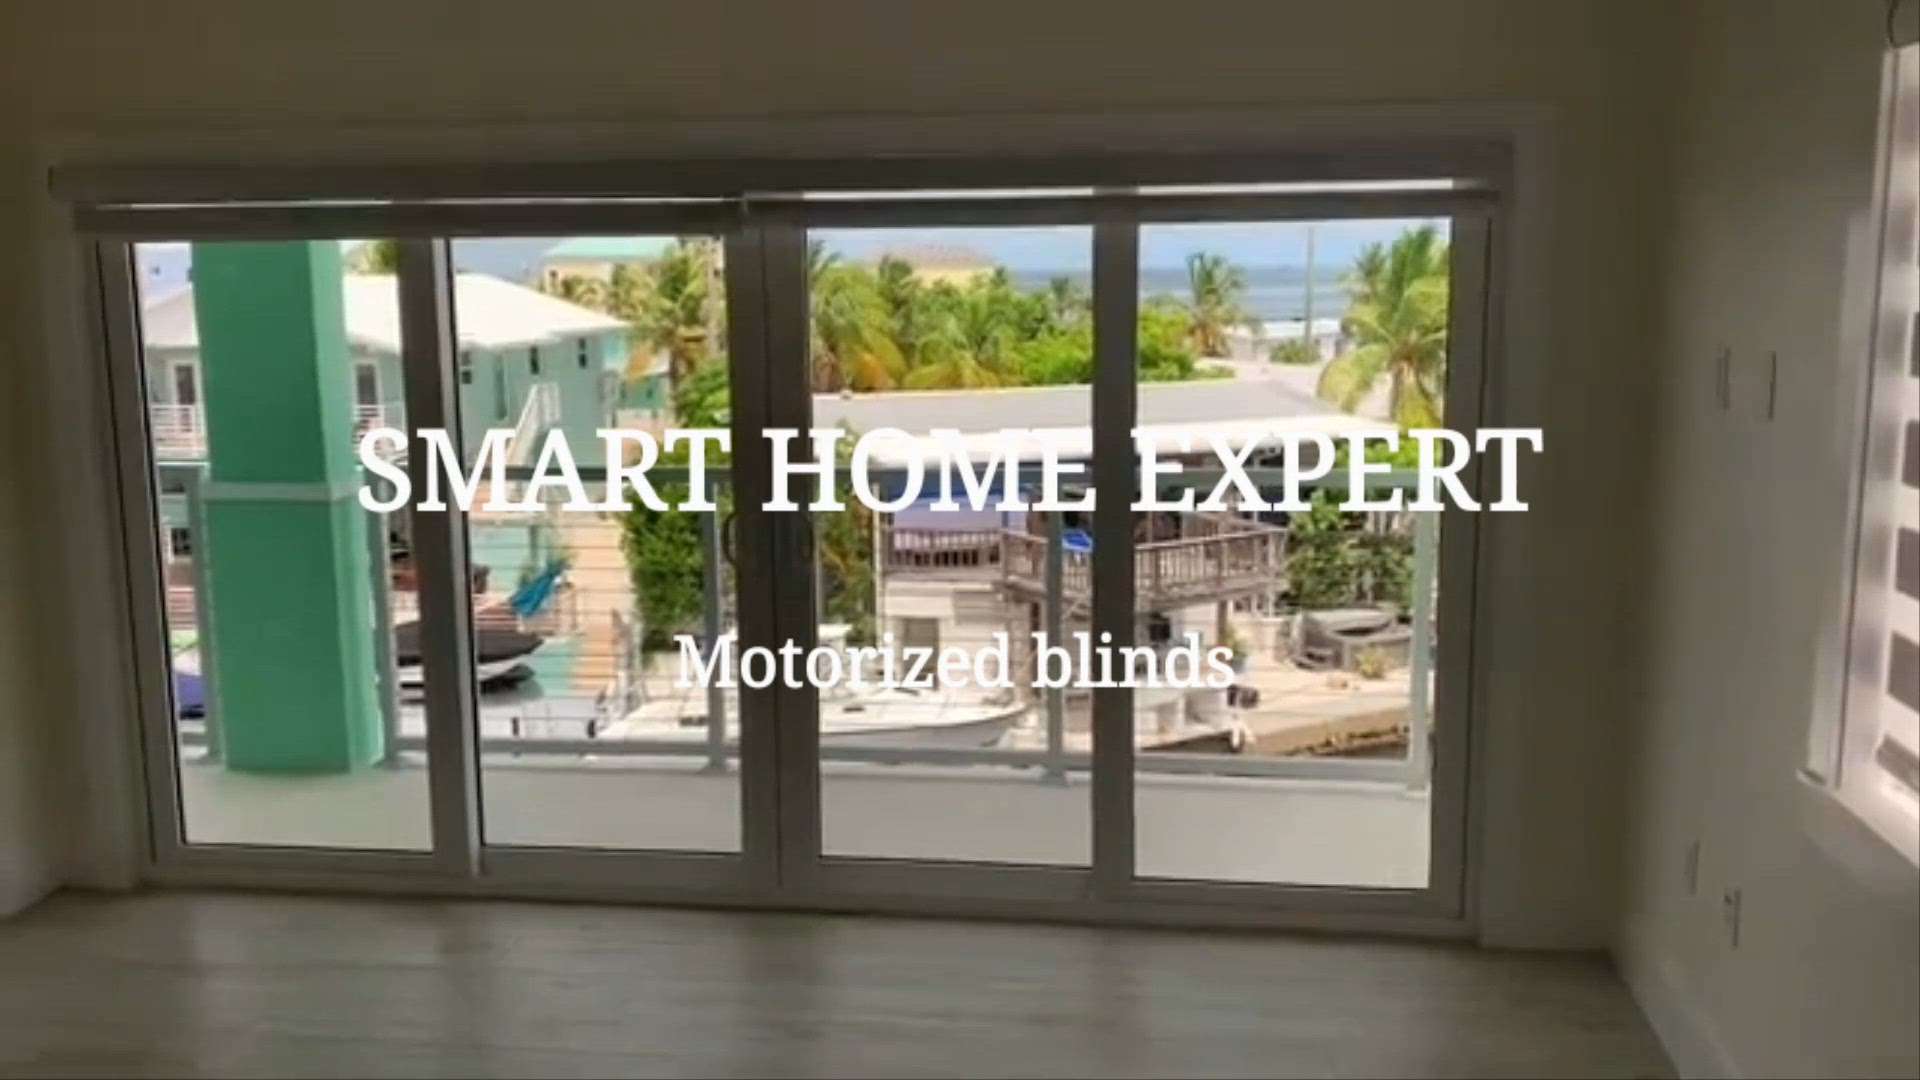 Smart Home Expert 
 #Blindautomation  
 #motrized blinds